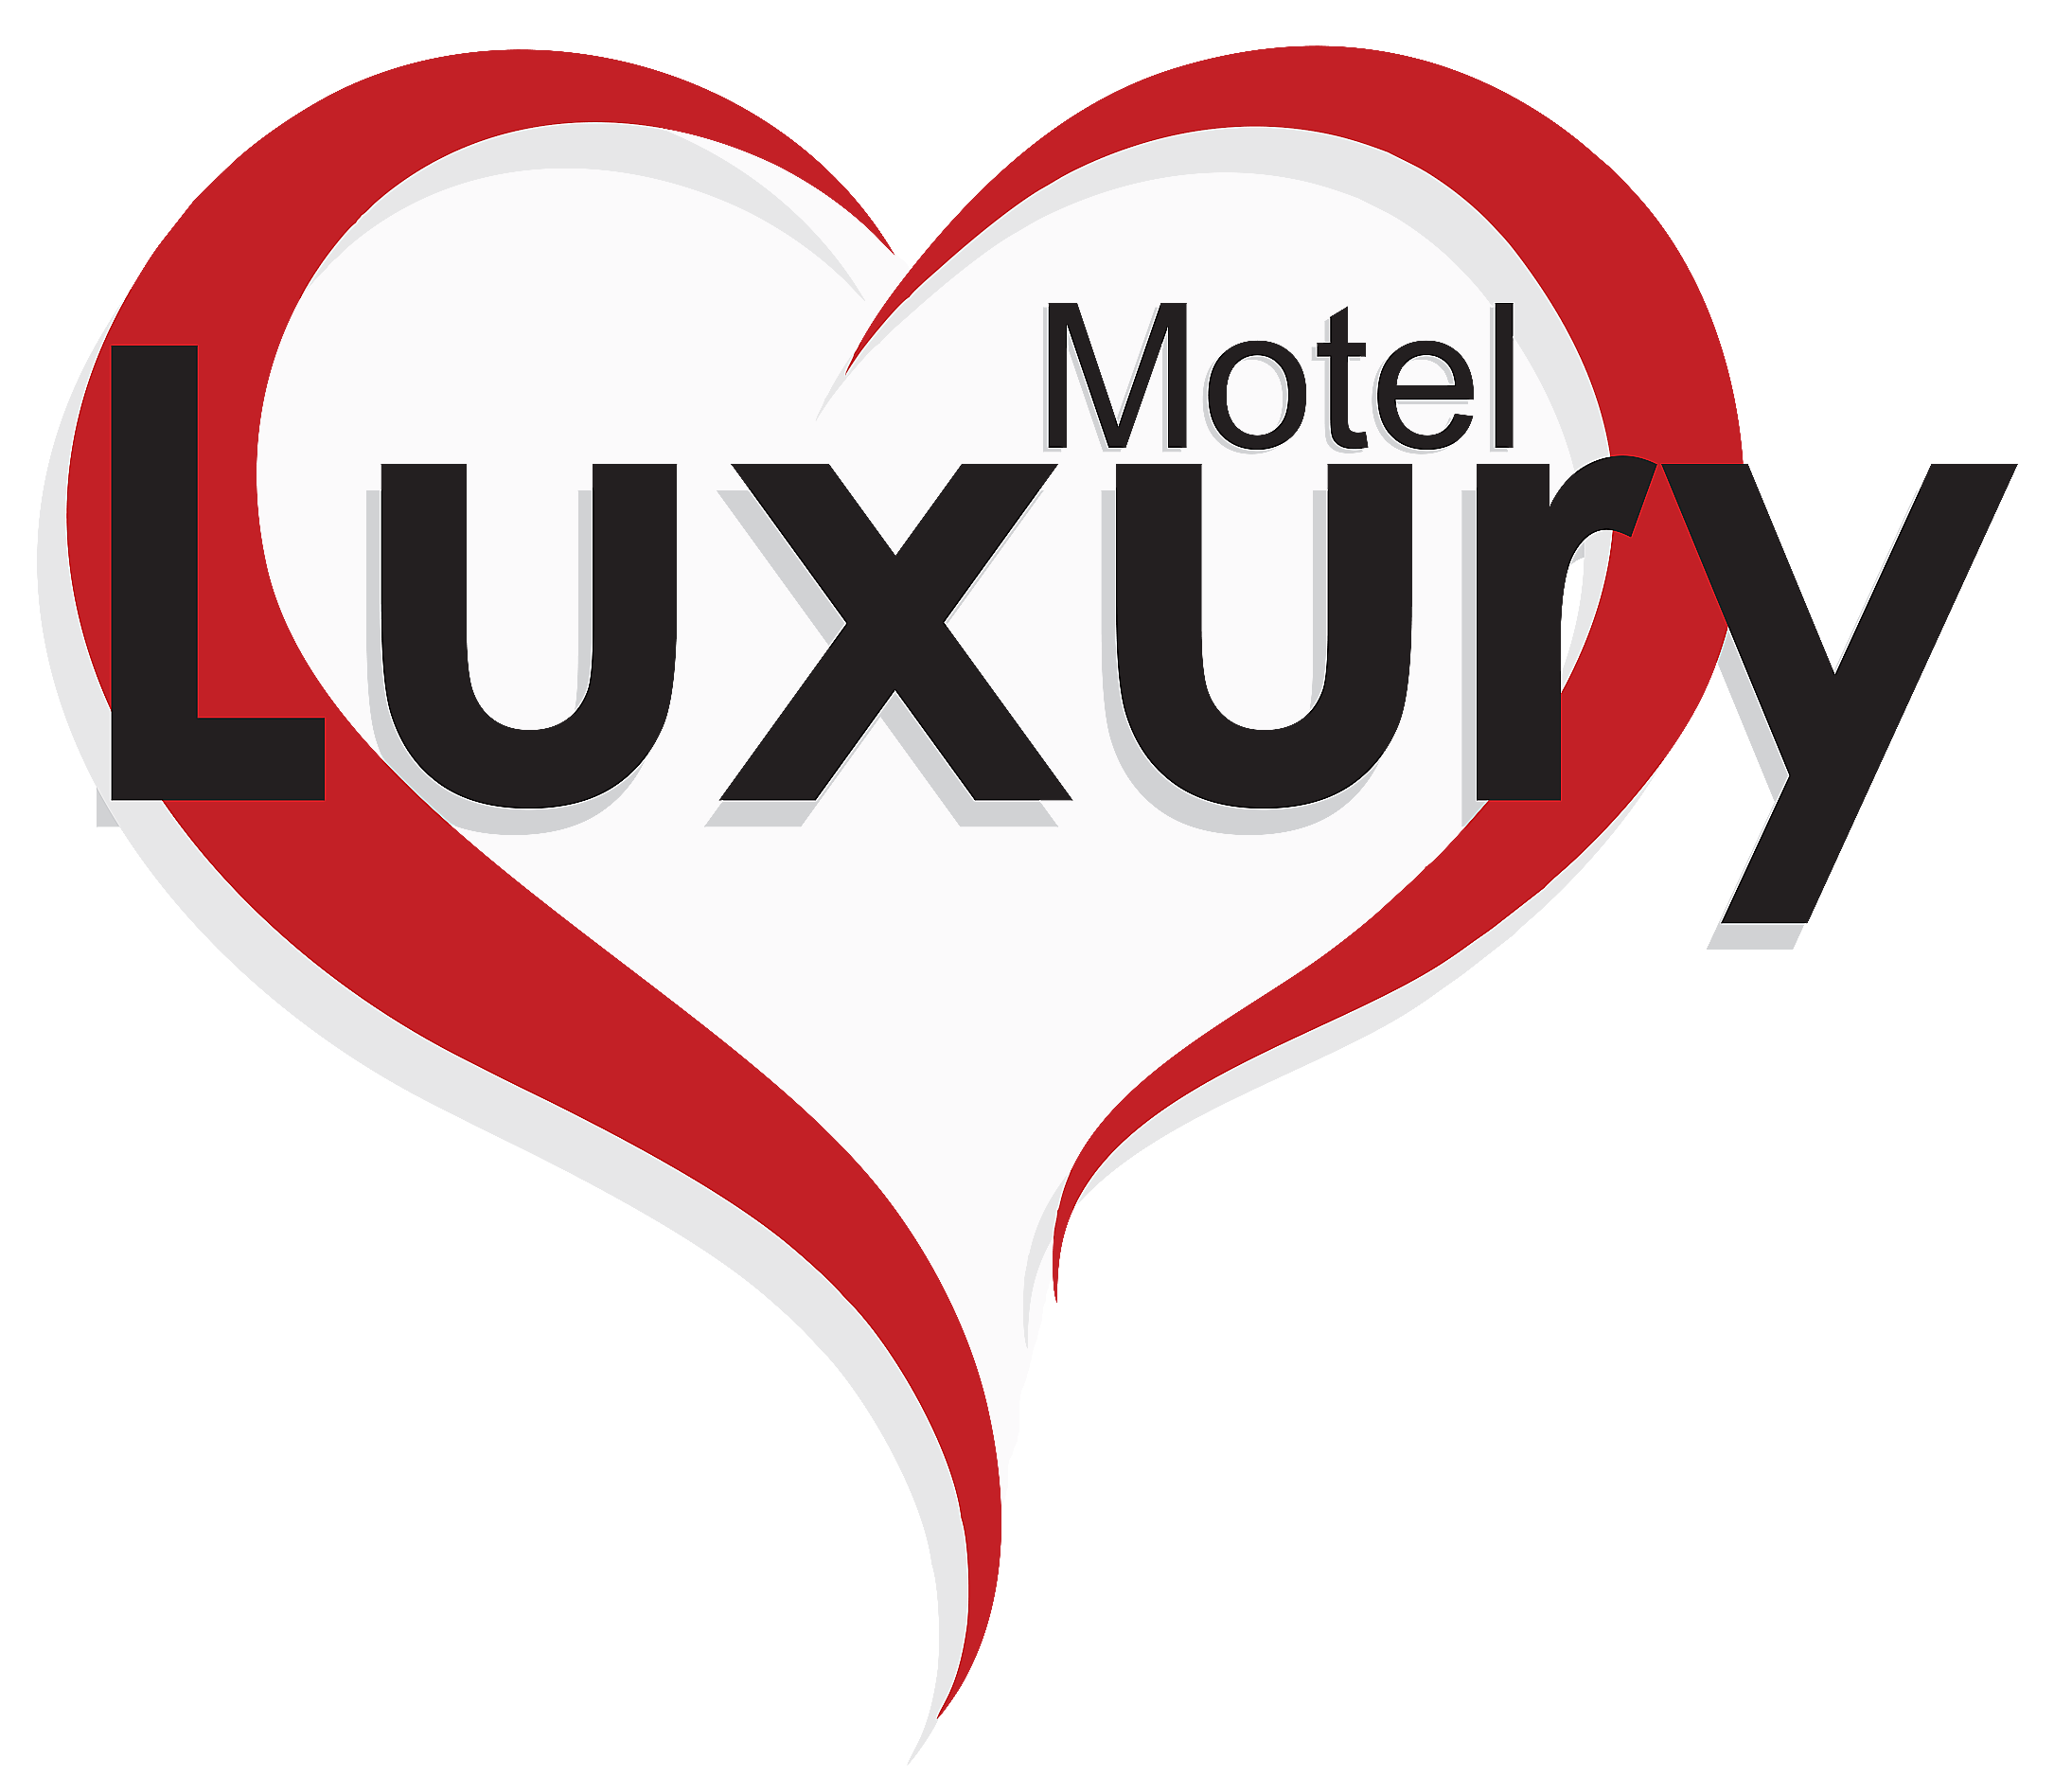 Motel Luxuy